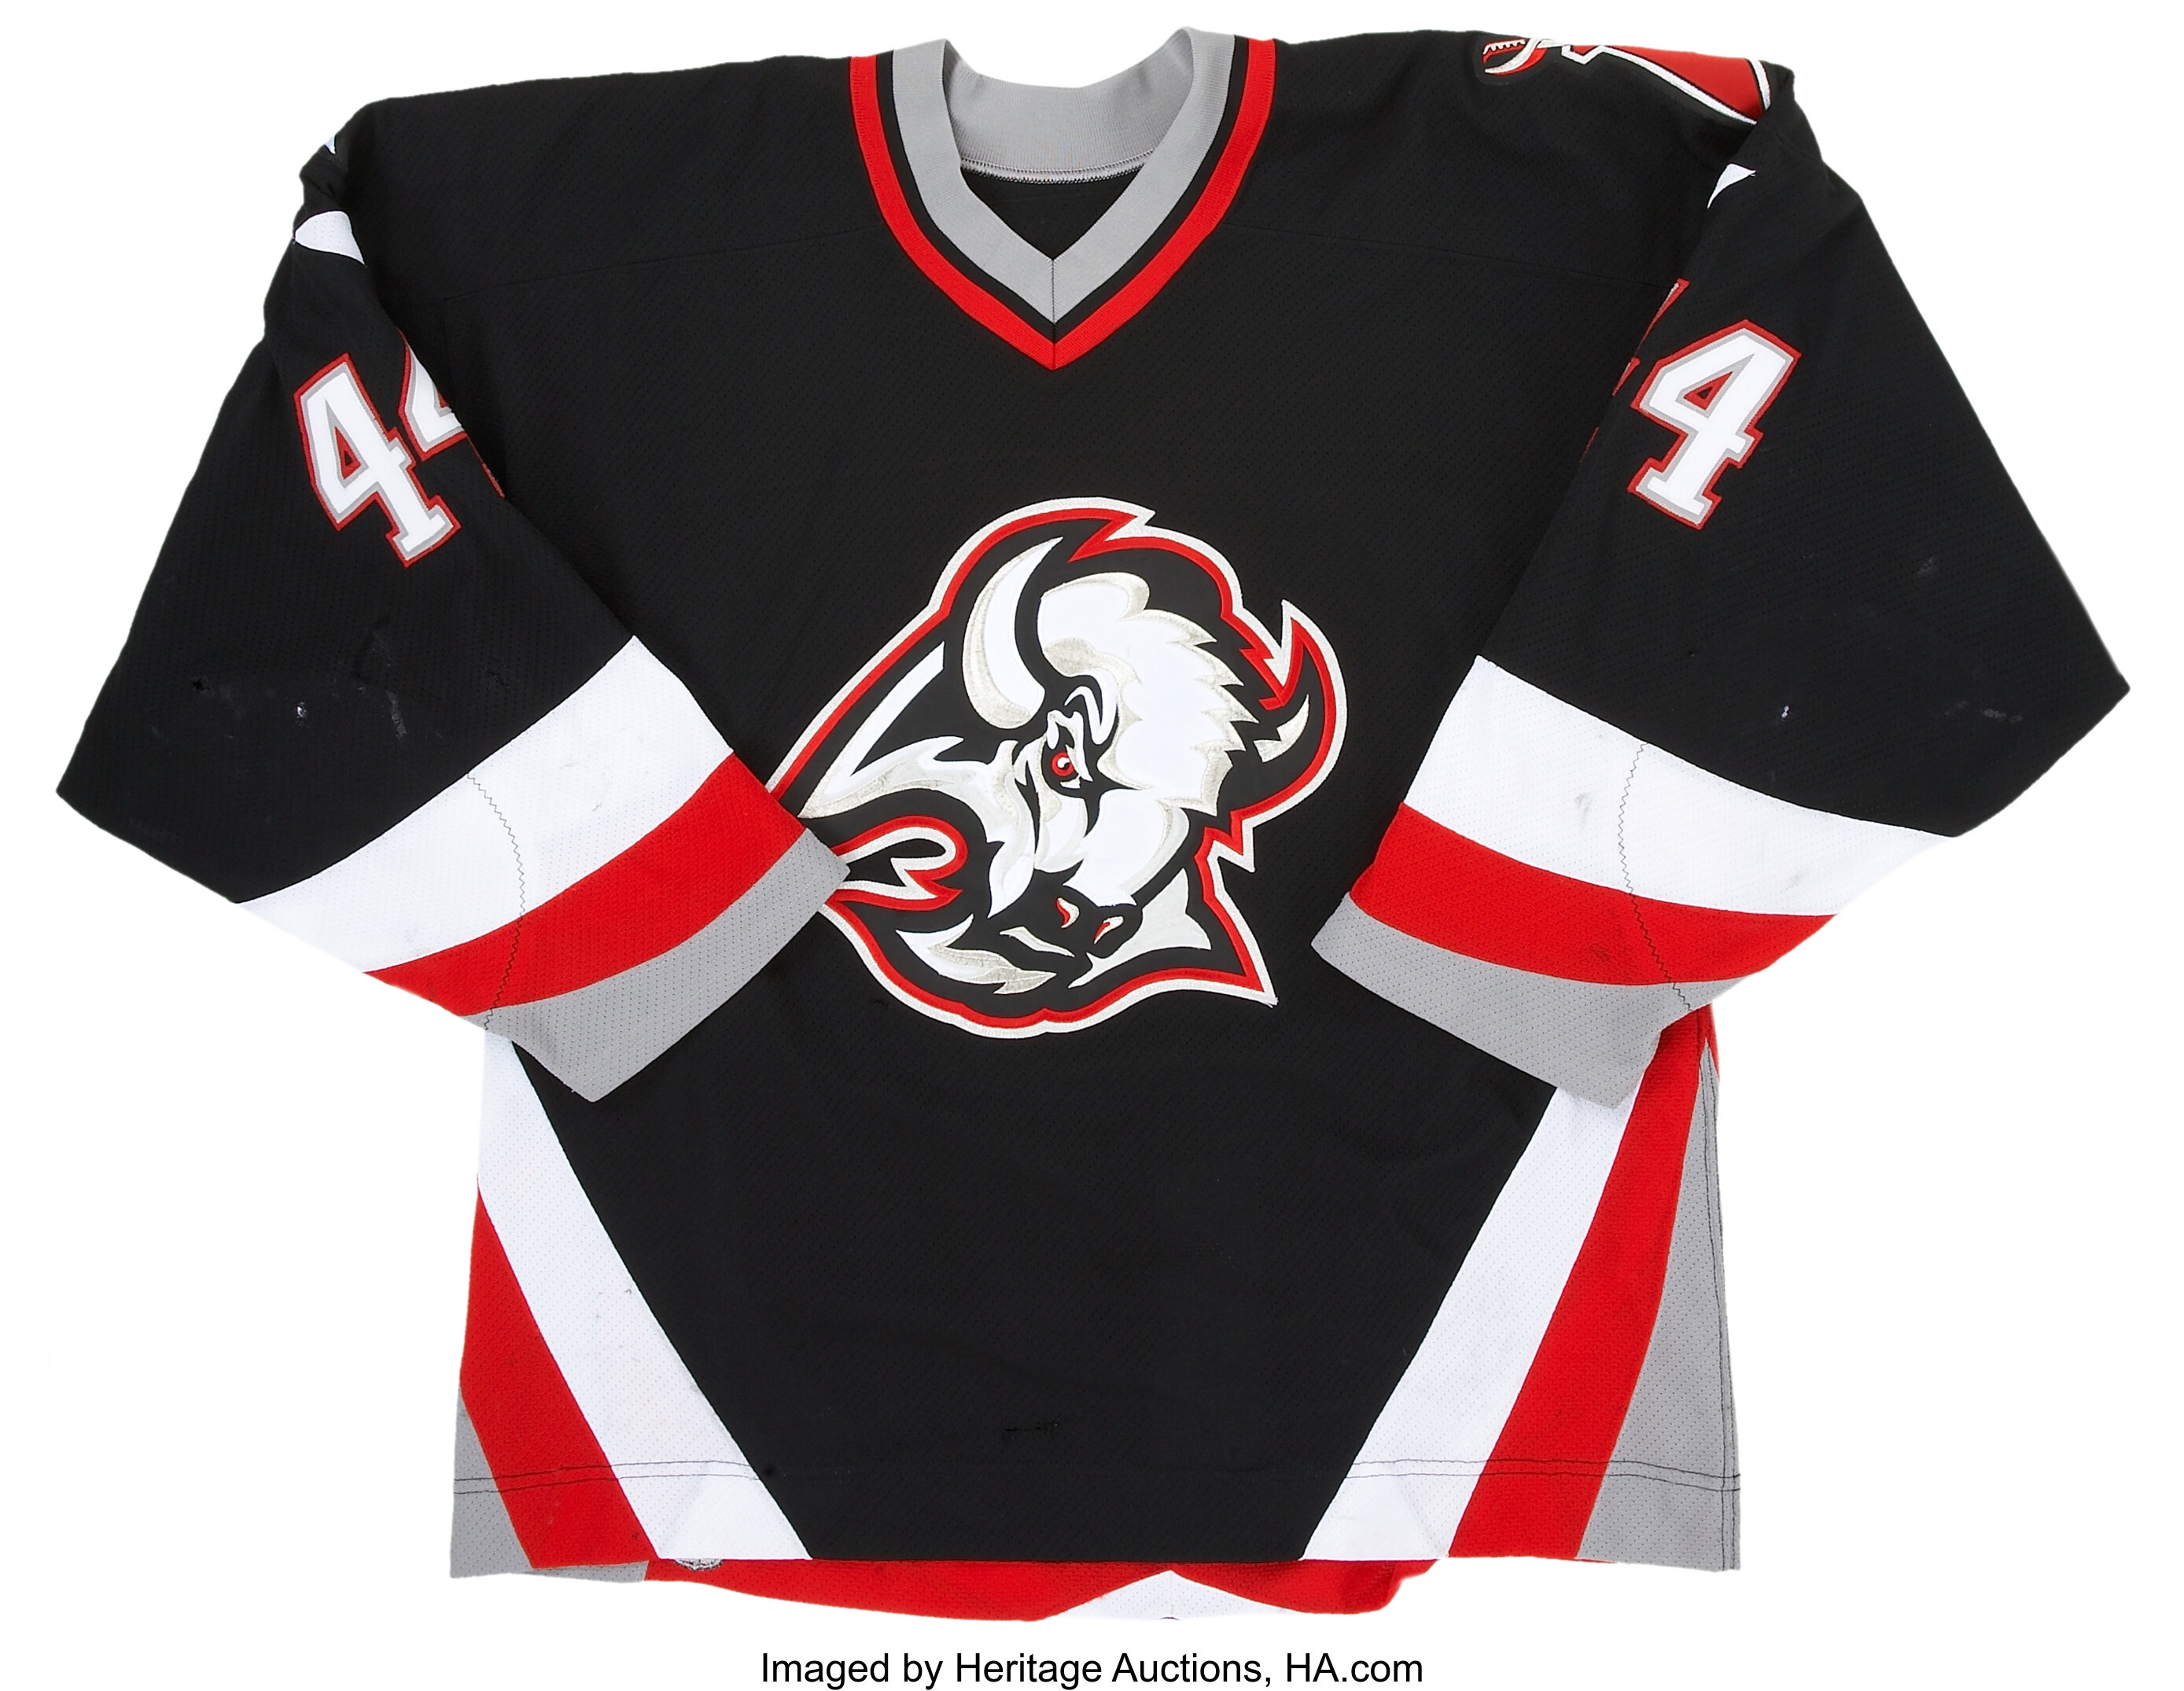 2002-03 Alexei Zhitnik Buffalo Sabres Game Worn Jersey.  Hockey